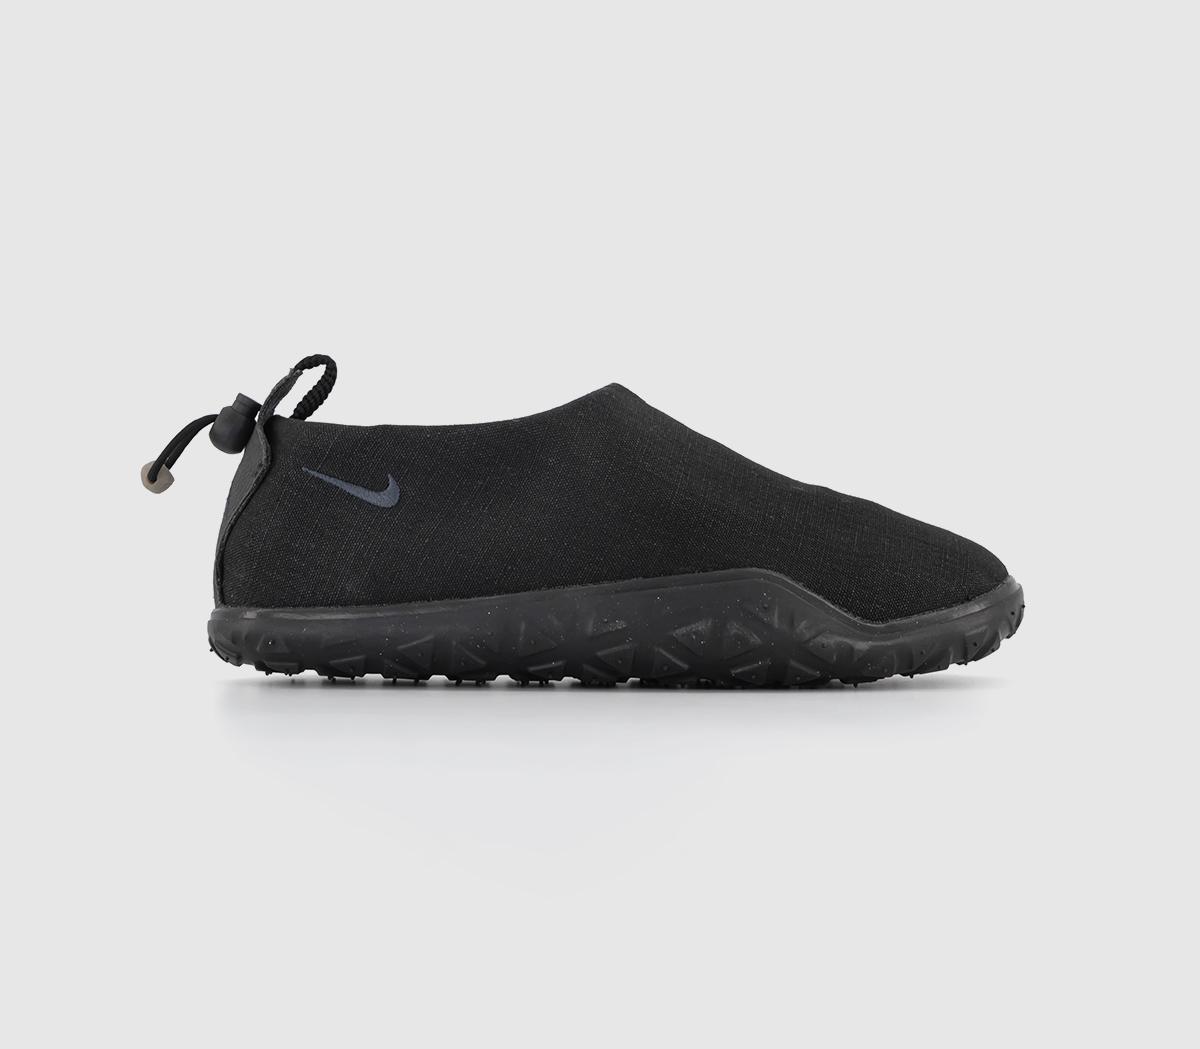 Nike Mens Acg Moc Shoes Black Anthracite Black, 7